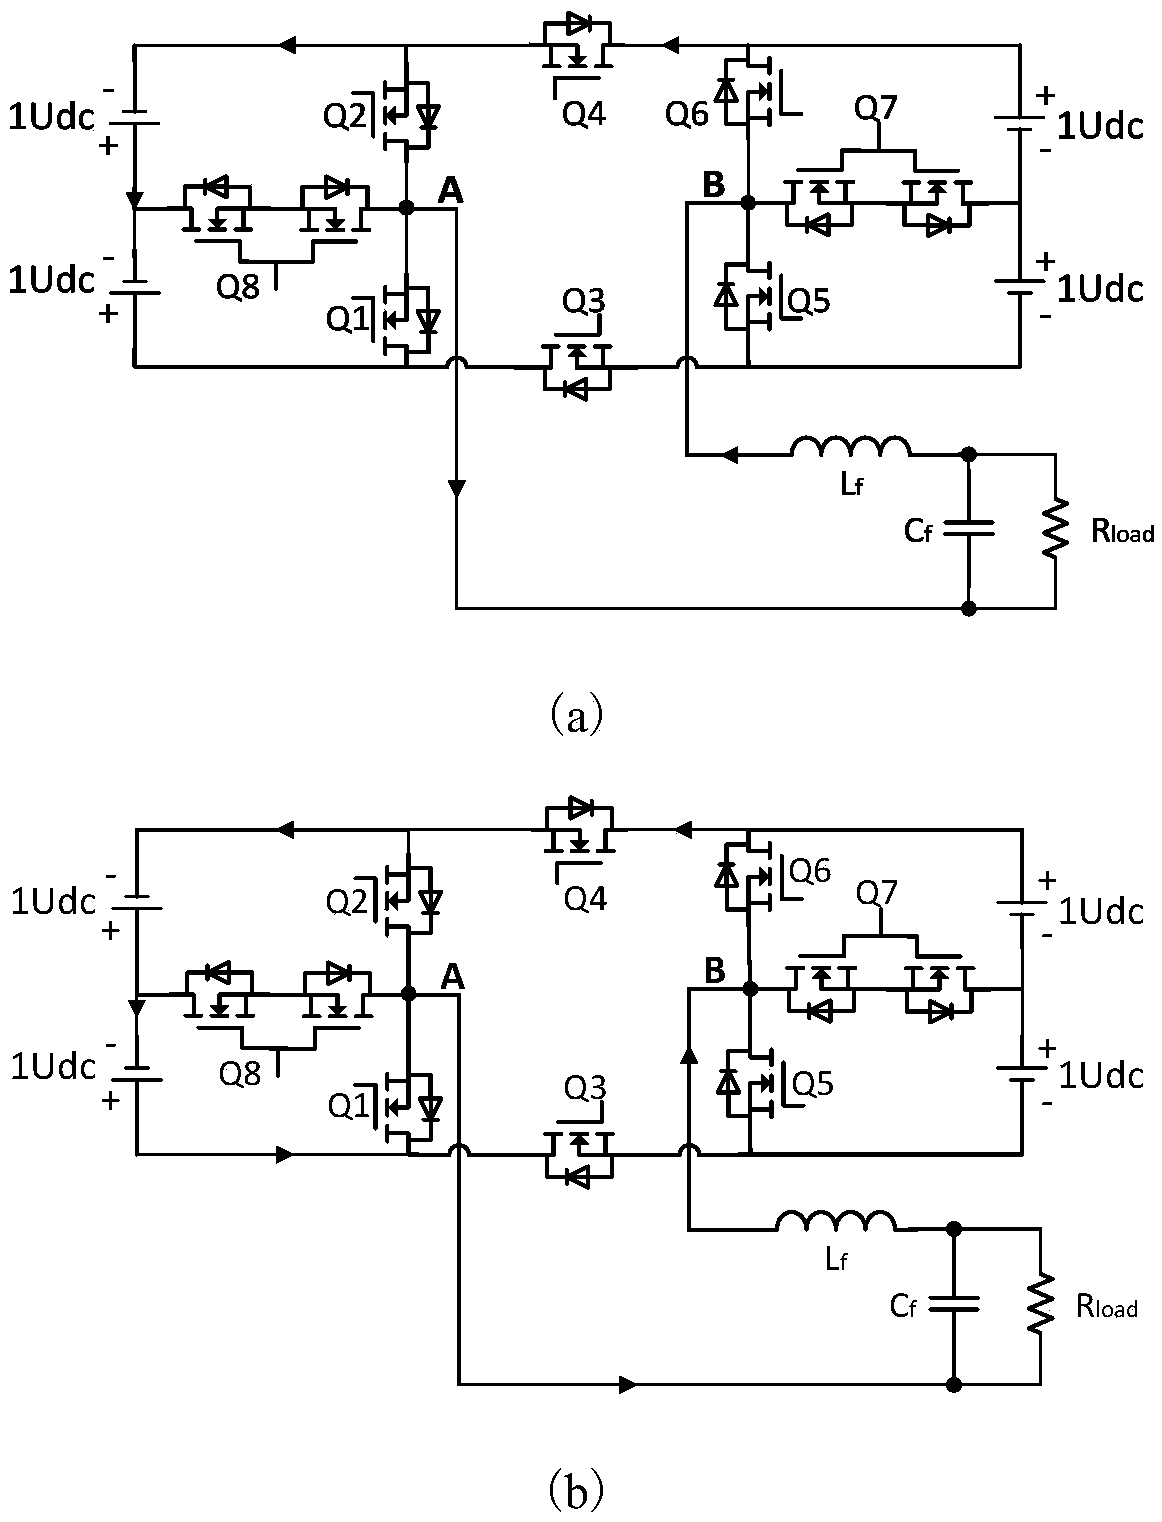 A nine-level inverter topology circuit